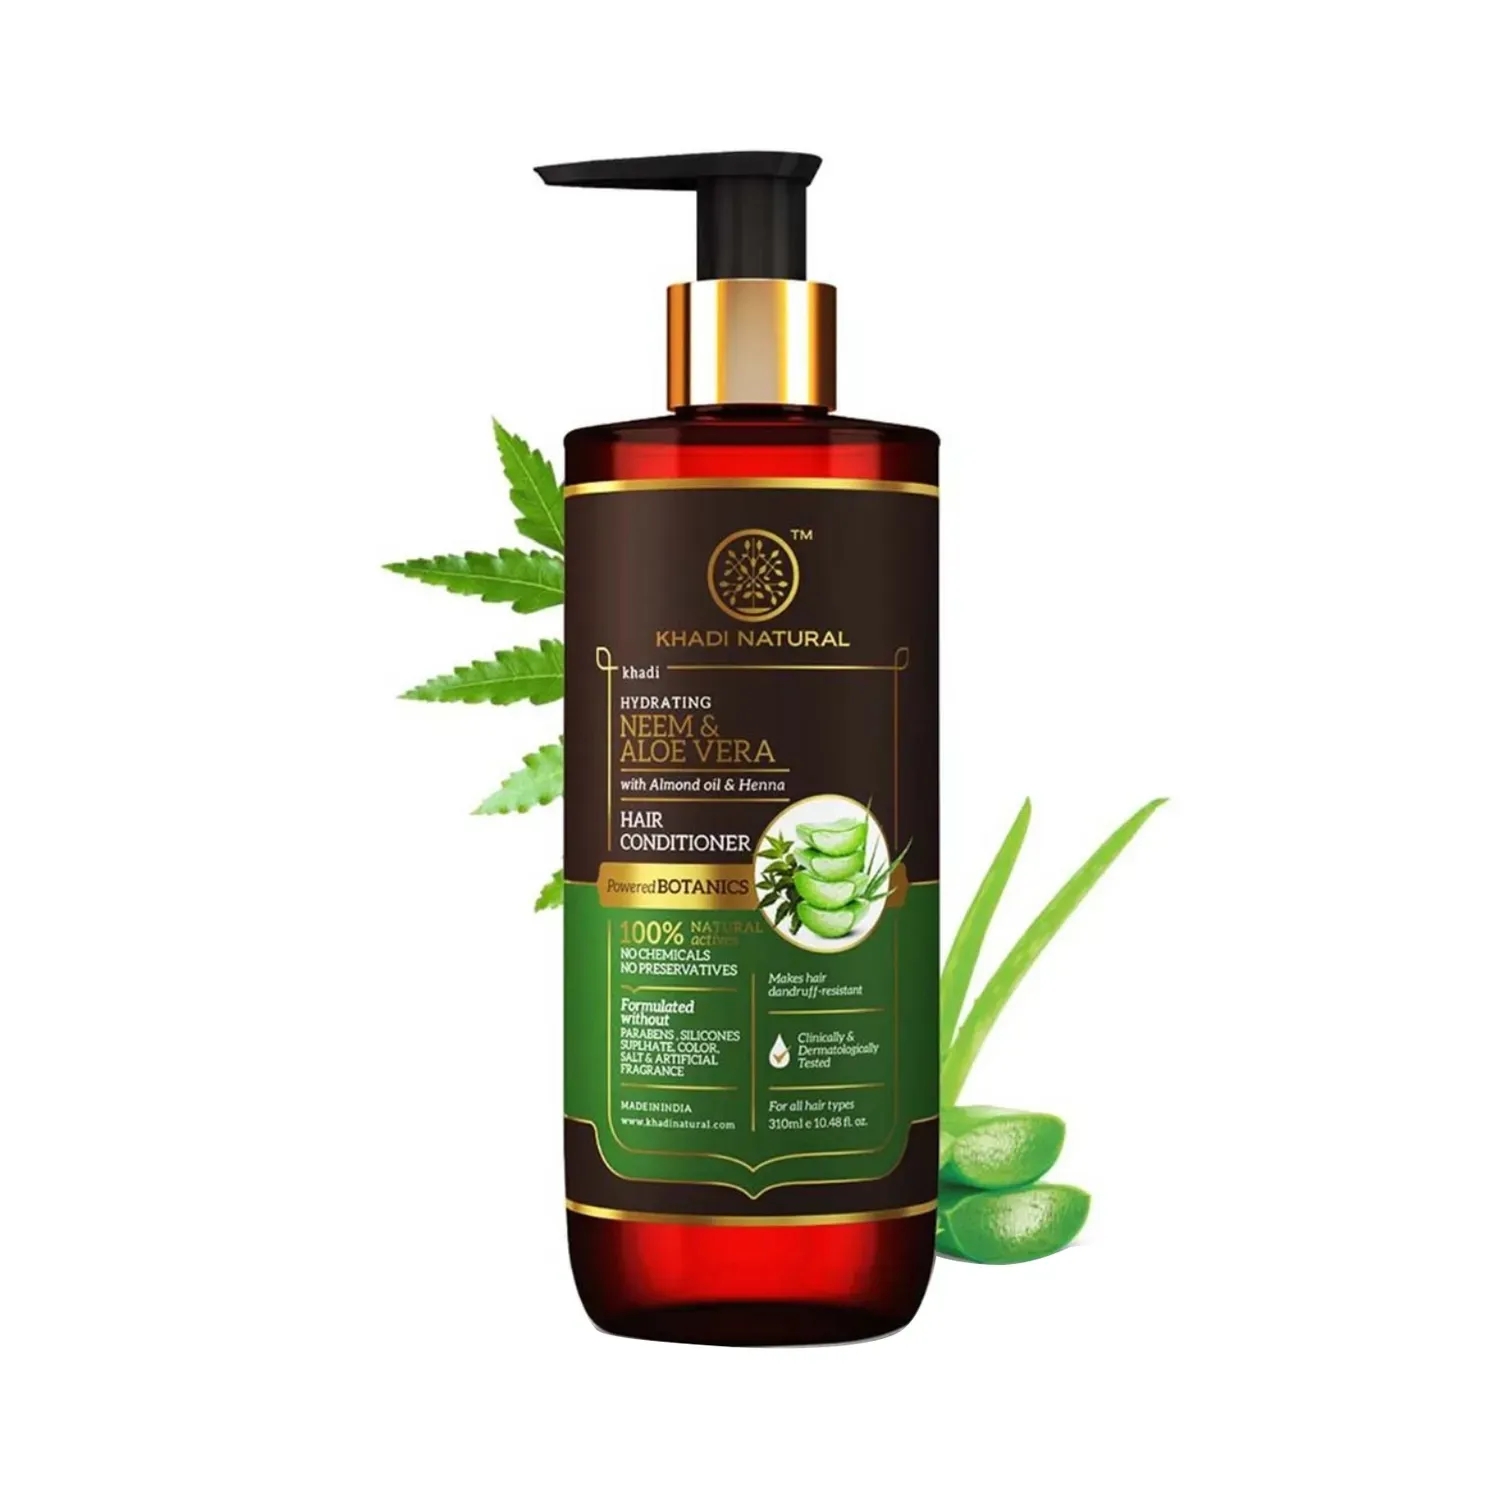 Khadi Natural | Khadi Natural Neem & Aloe Vera Hair Conditioner (310ml)